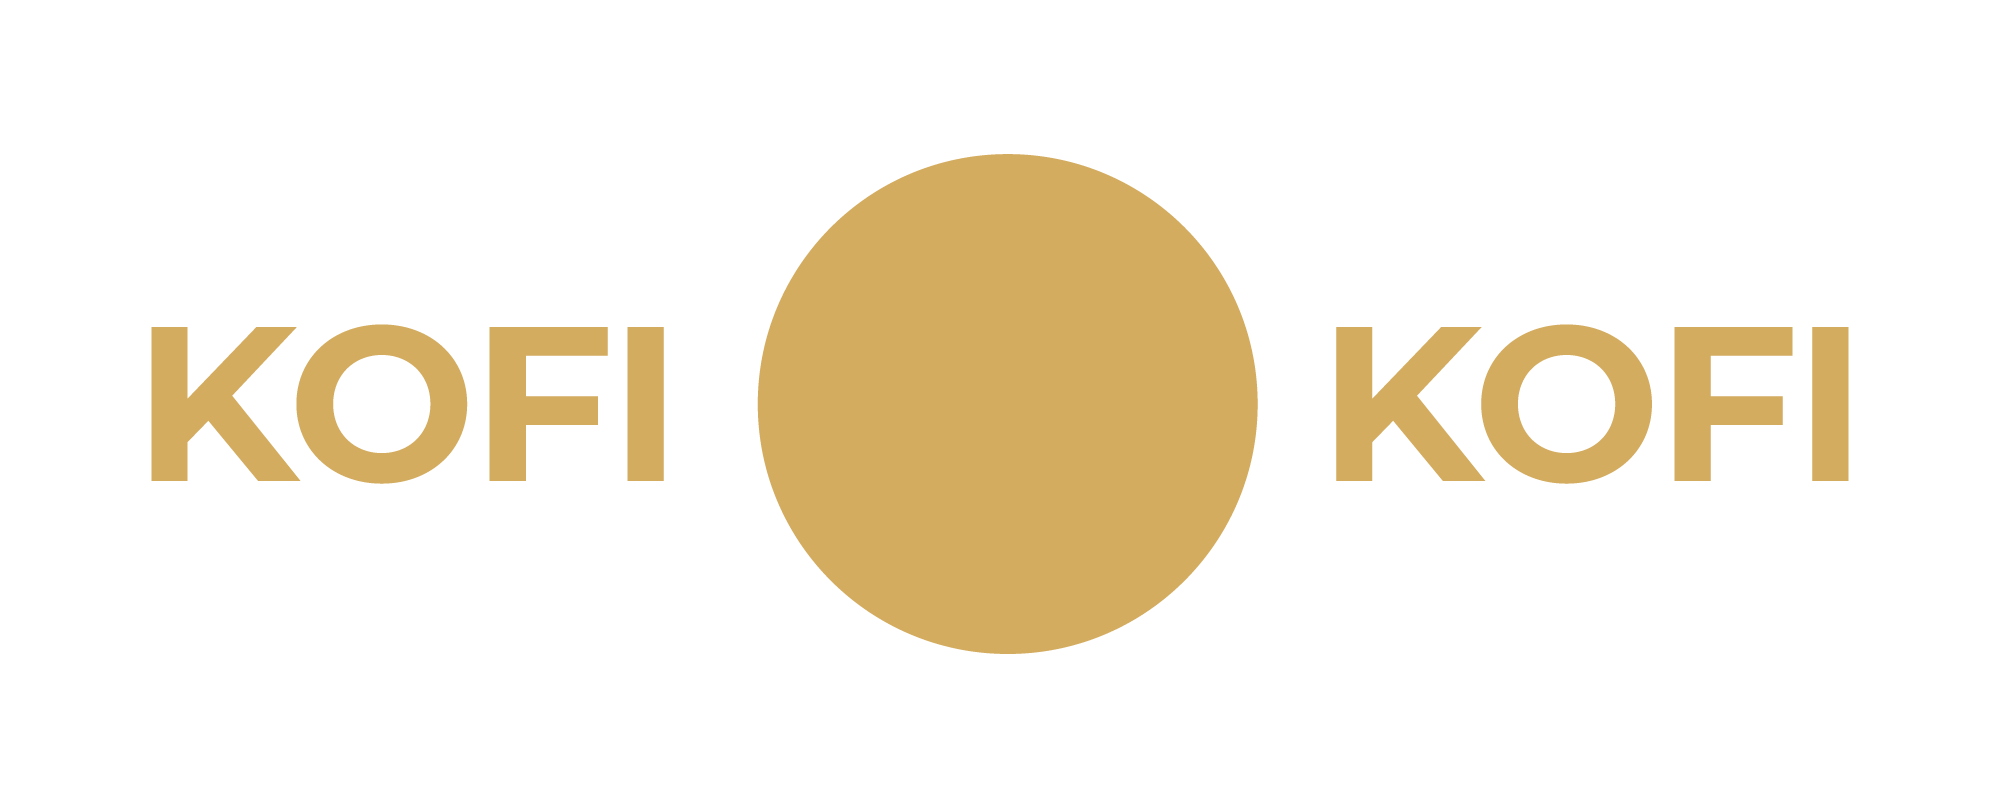 Kofi Kofi